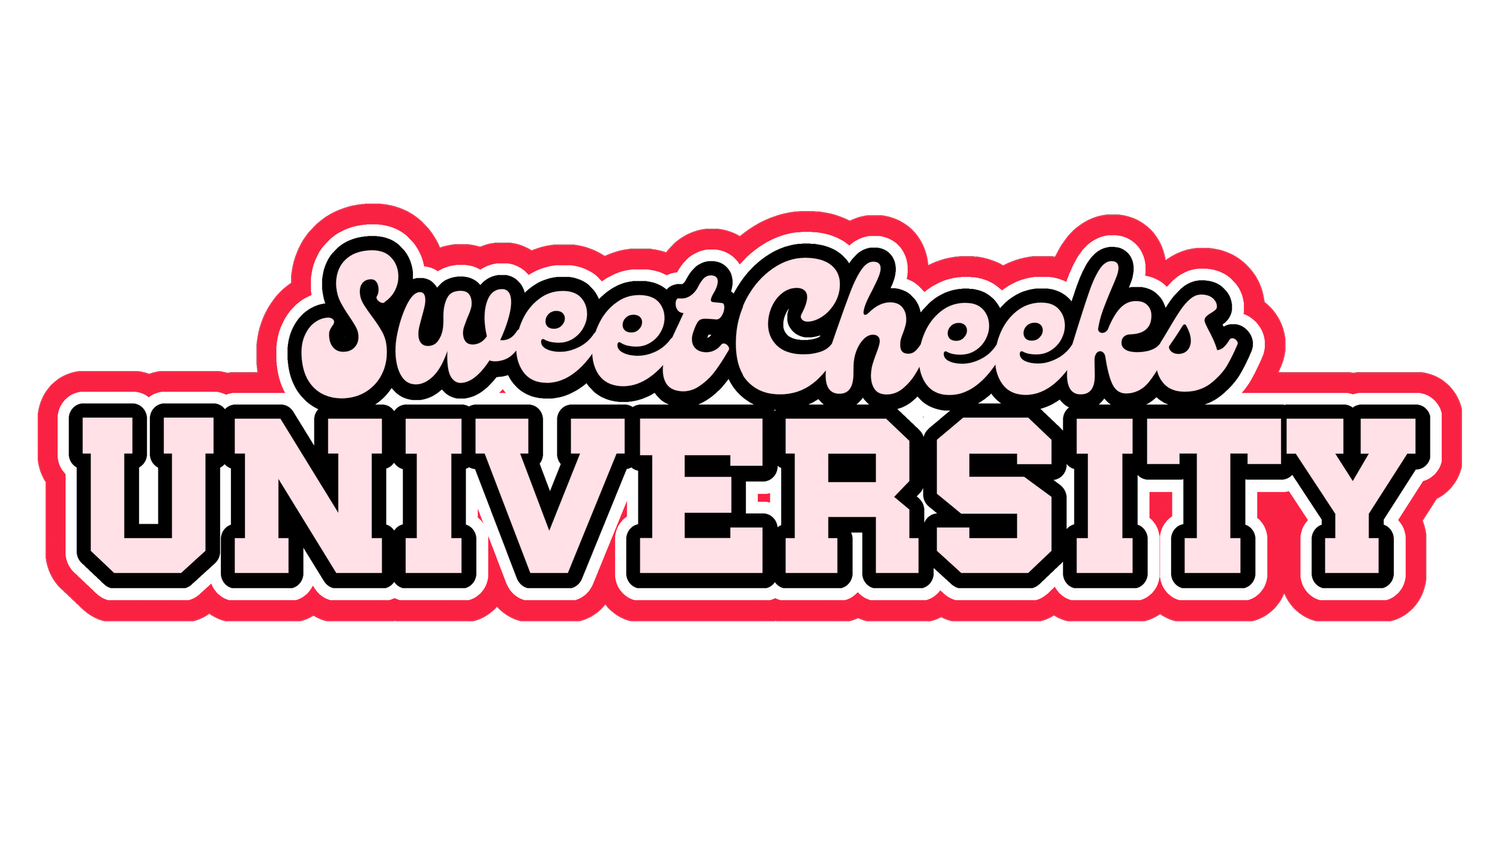        Sweet Cheeks University